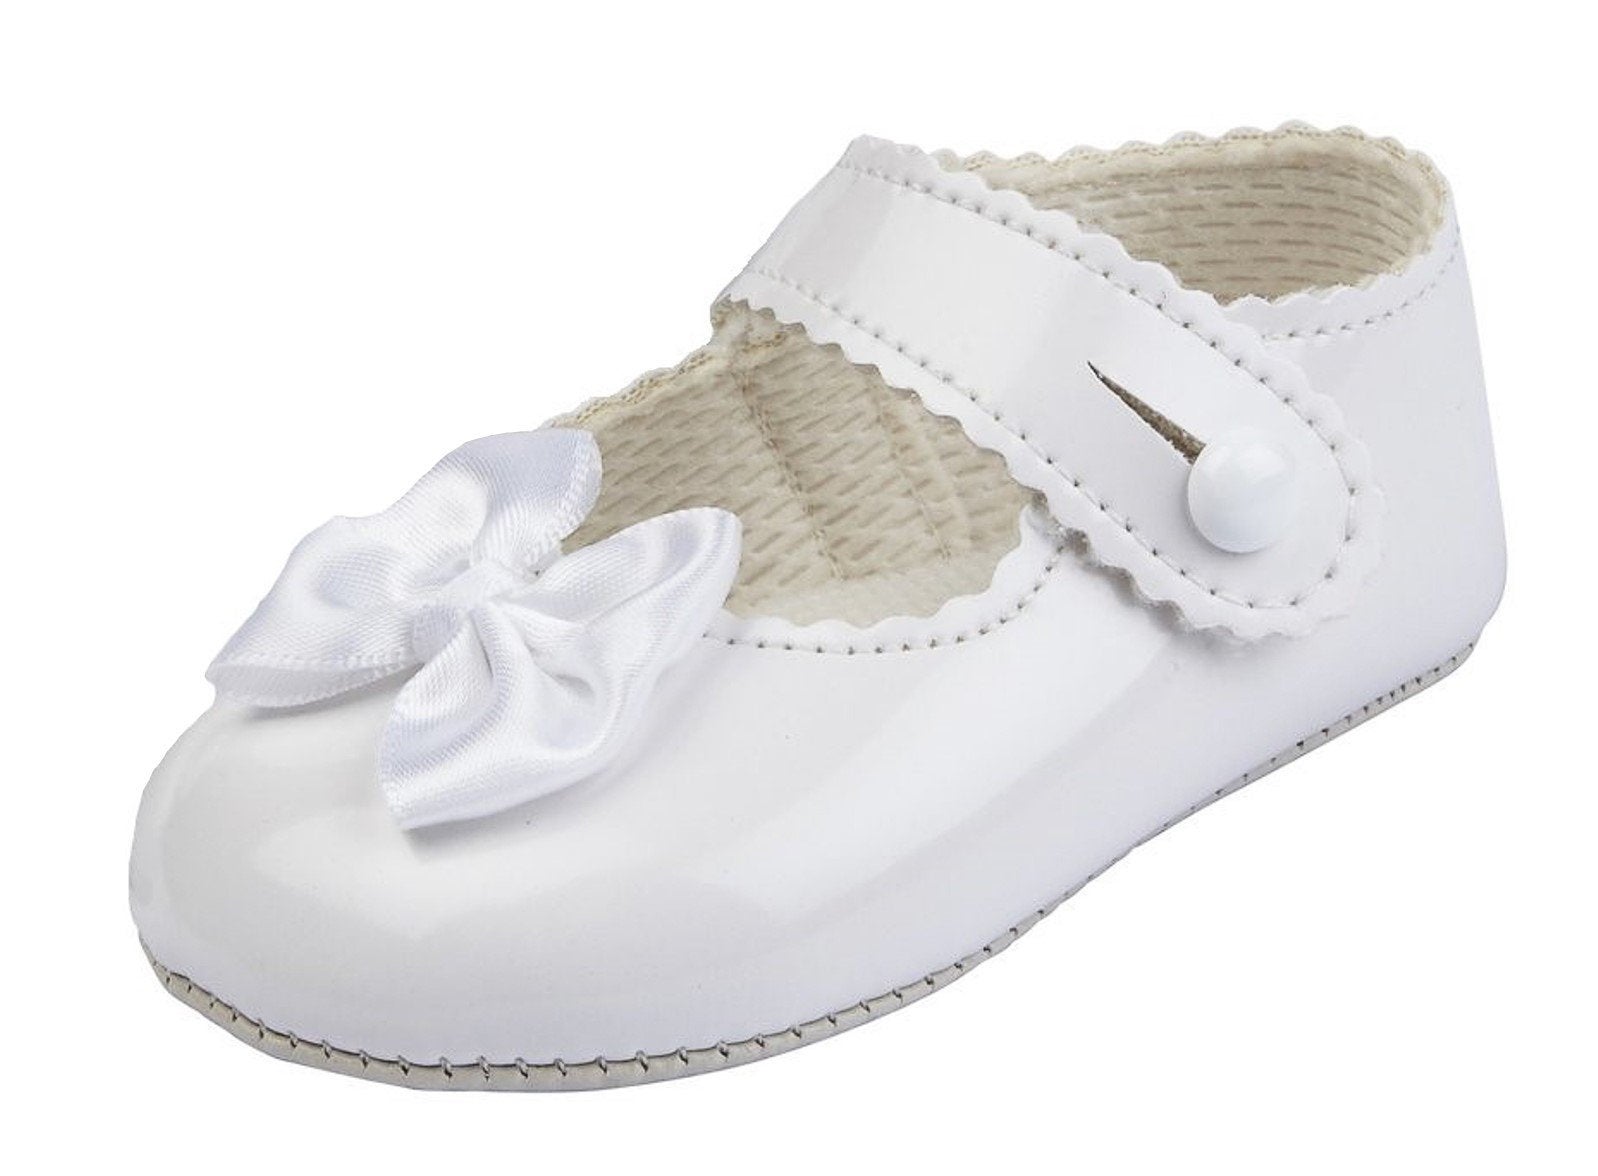 Baypods Pre-walker Shoes in Soft Patent in Easy Wear Style